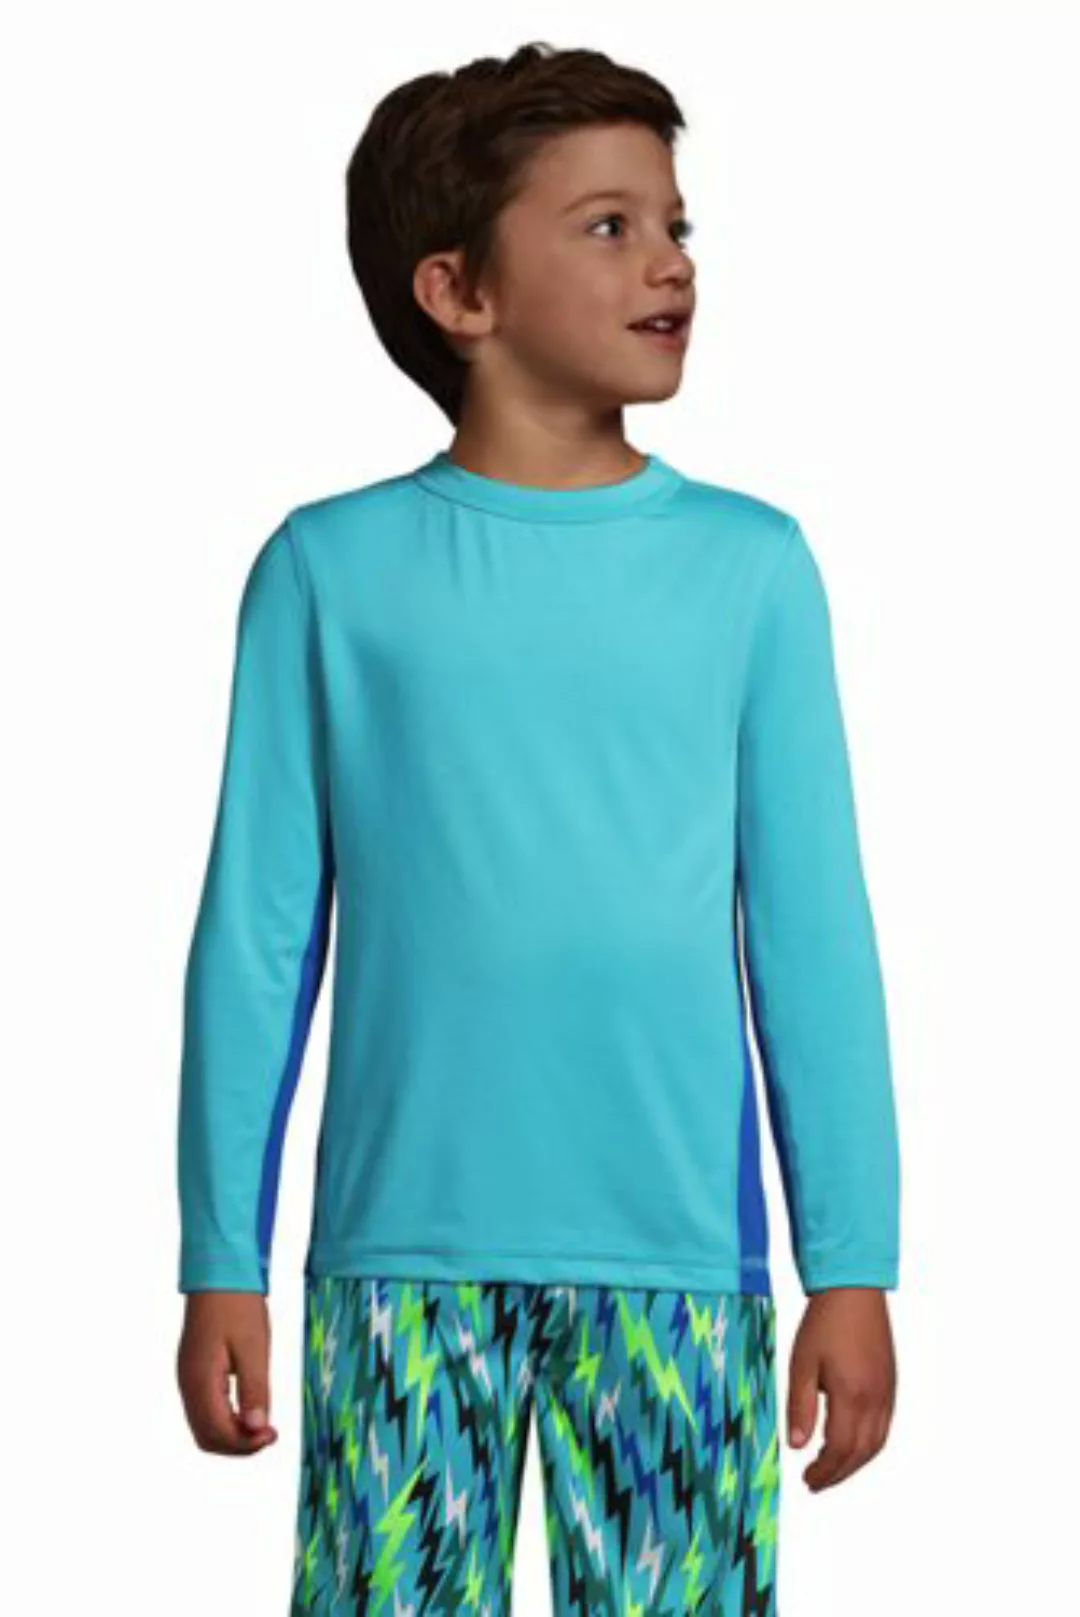 ACTIVE Langarm-Shirt, Größe: 128-134, Blau, Elasthan, by Lands' End, Scuba günstig online kaufen